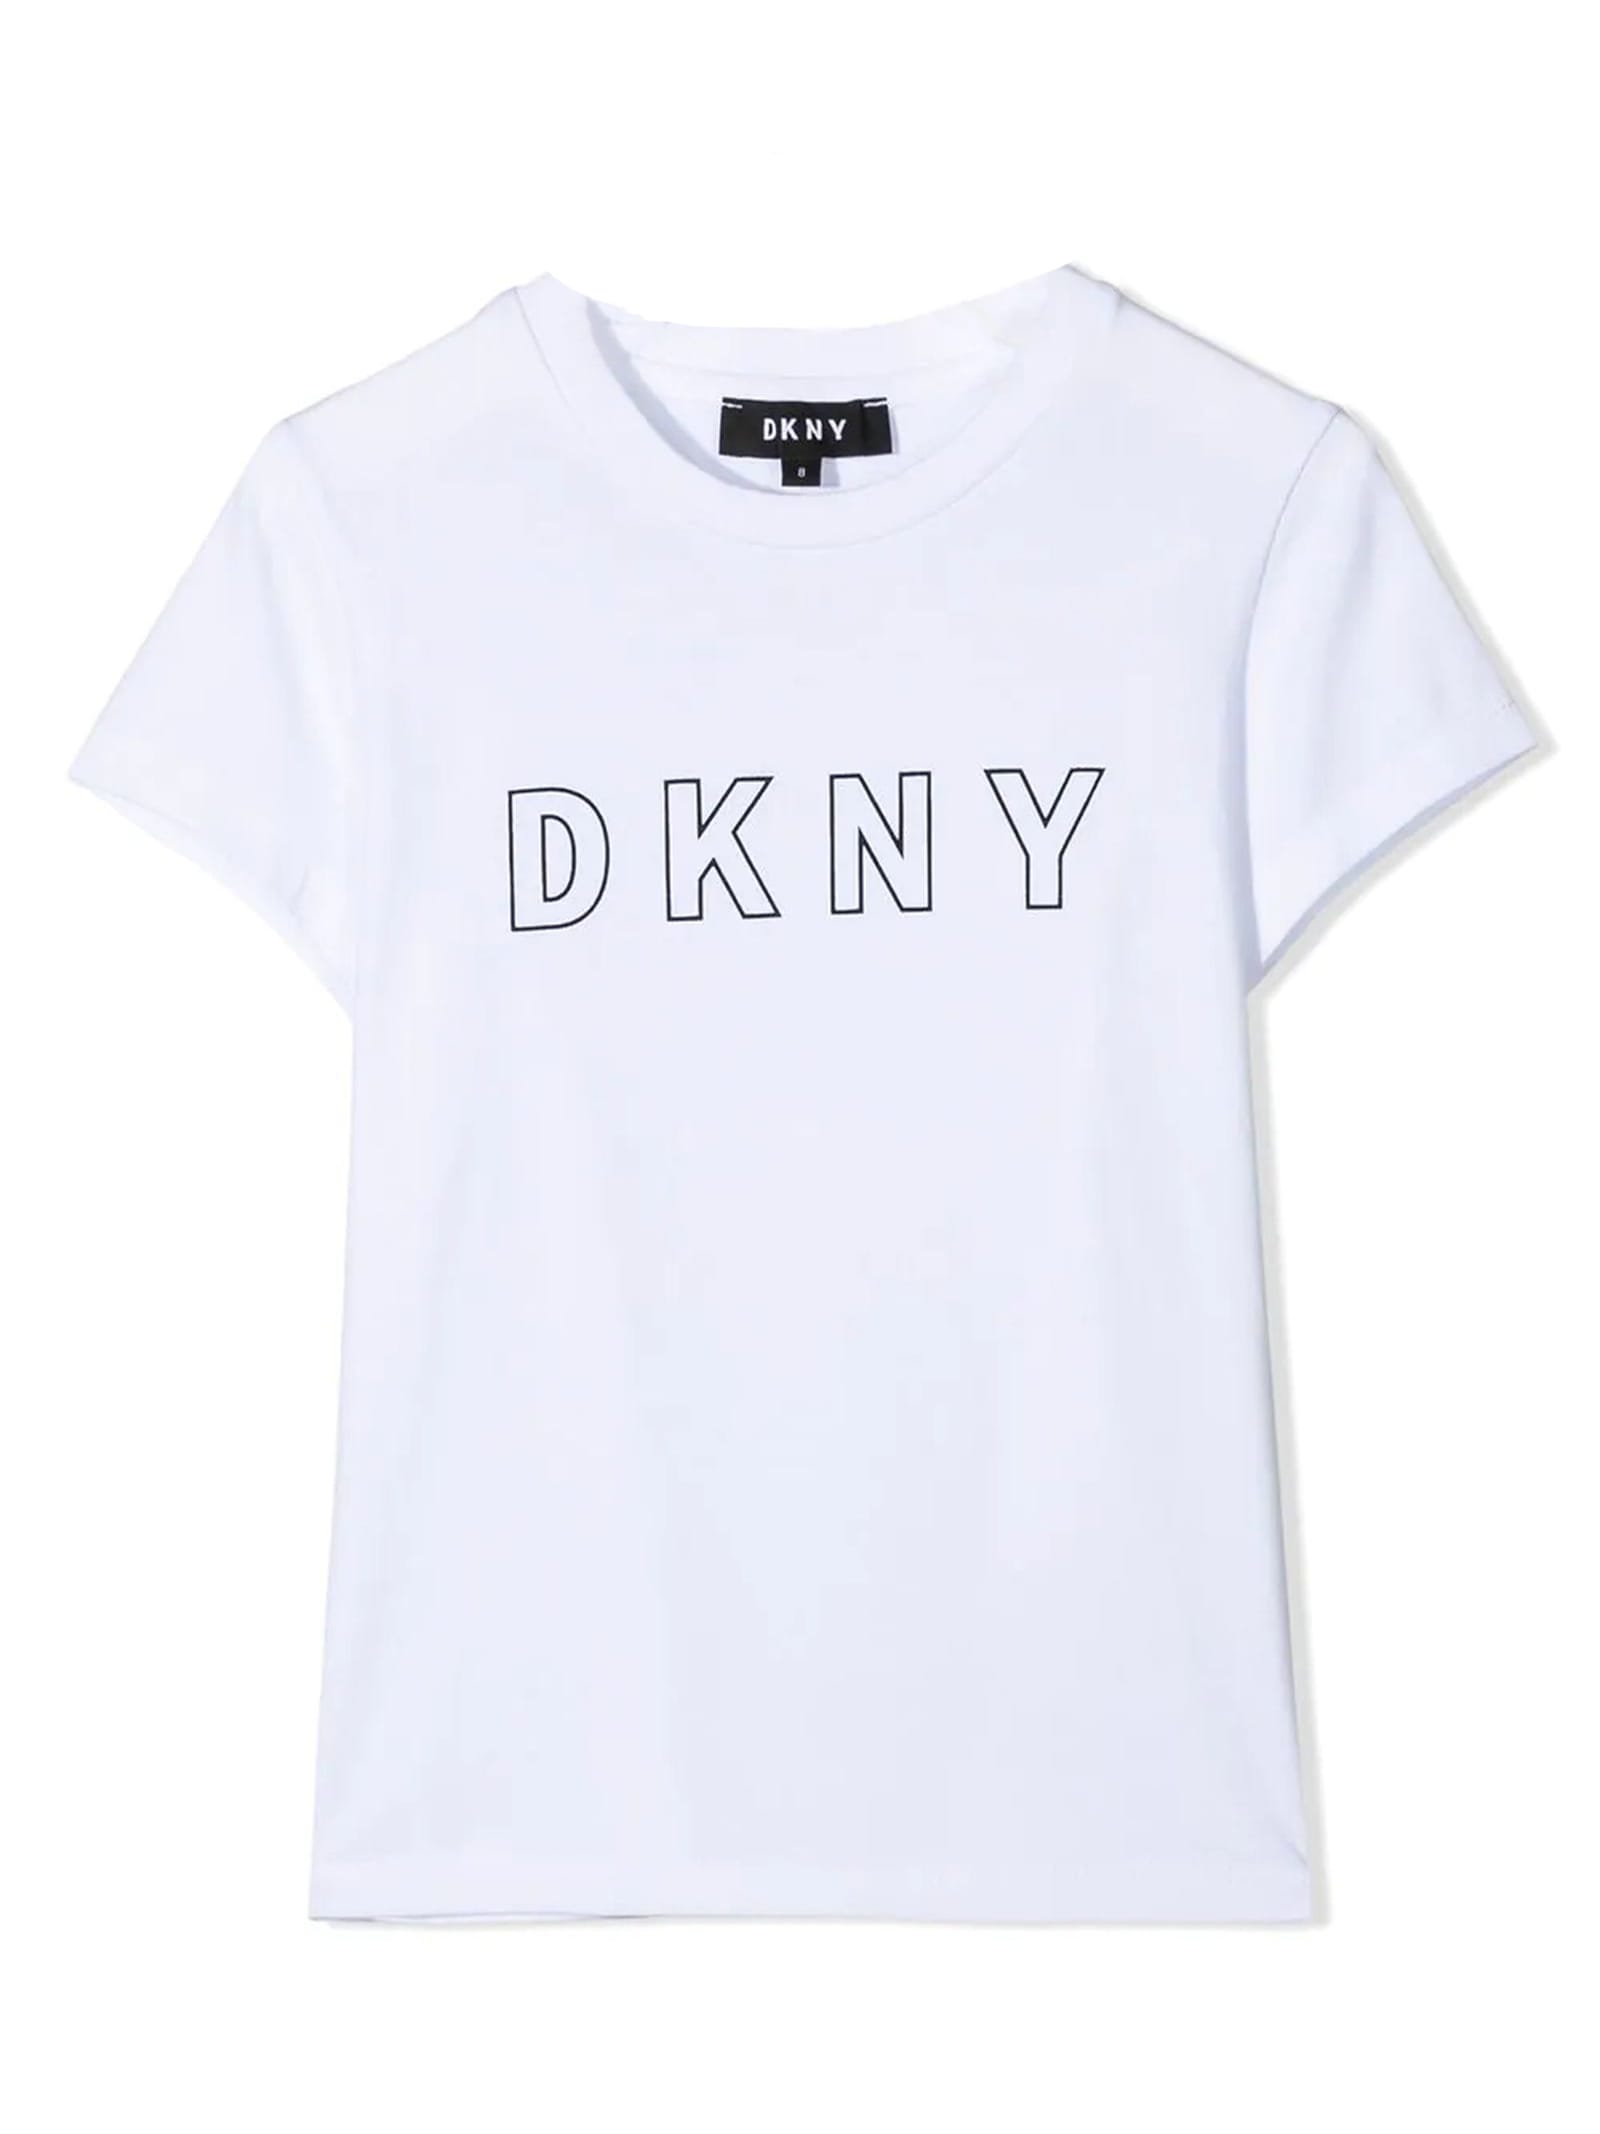 DKNY White Cotton T-shirt